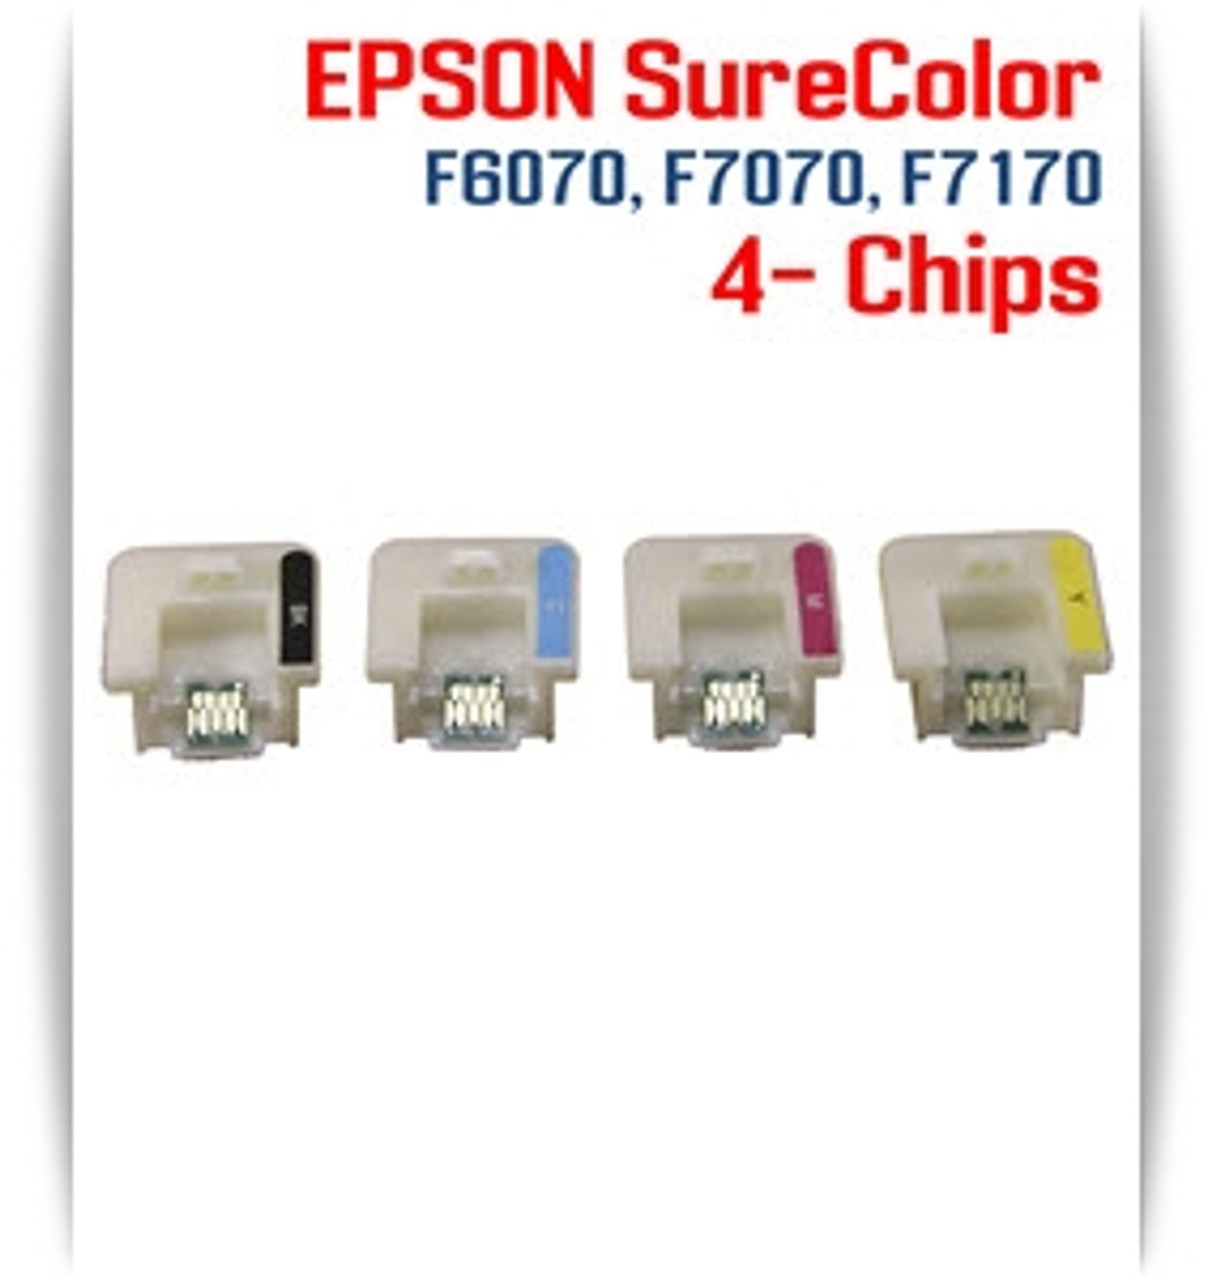 EPSON SureColor F6070, F7070, F7170 printer 4- Color Chips